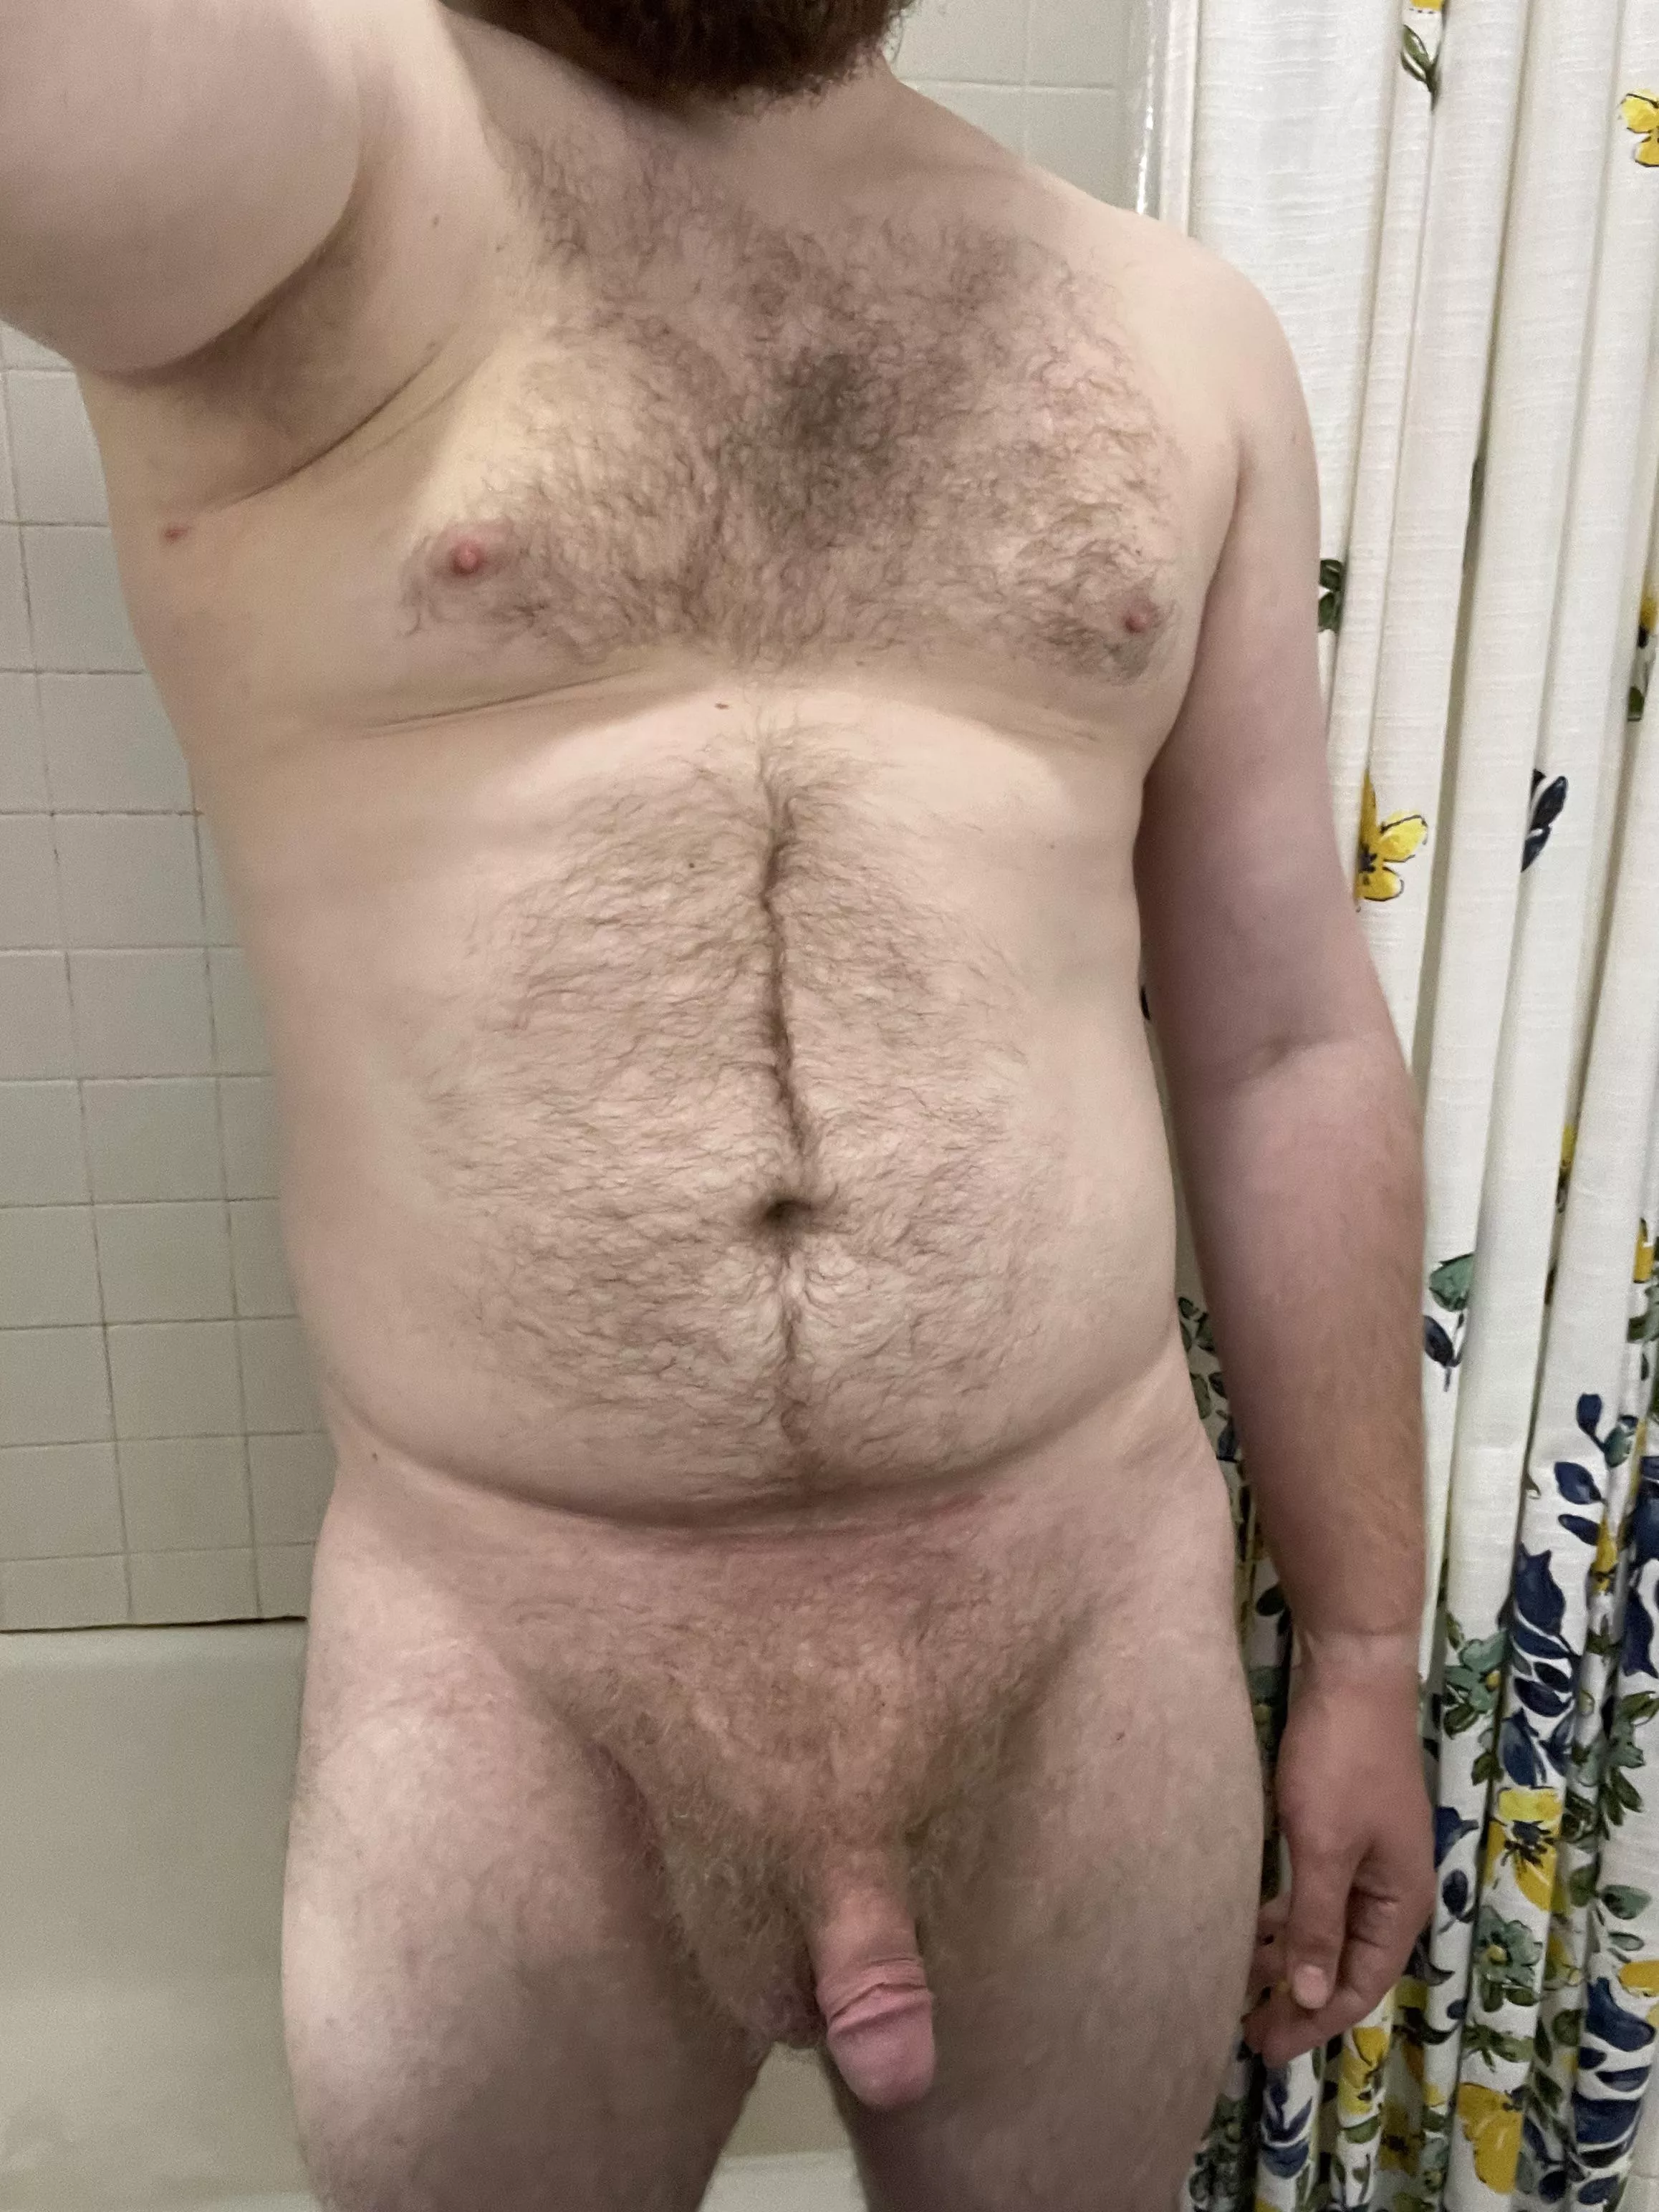 Fuckable Nudes Gaybears Nude Pics Org